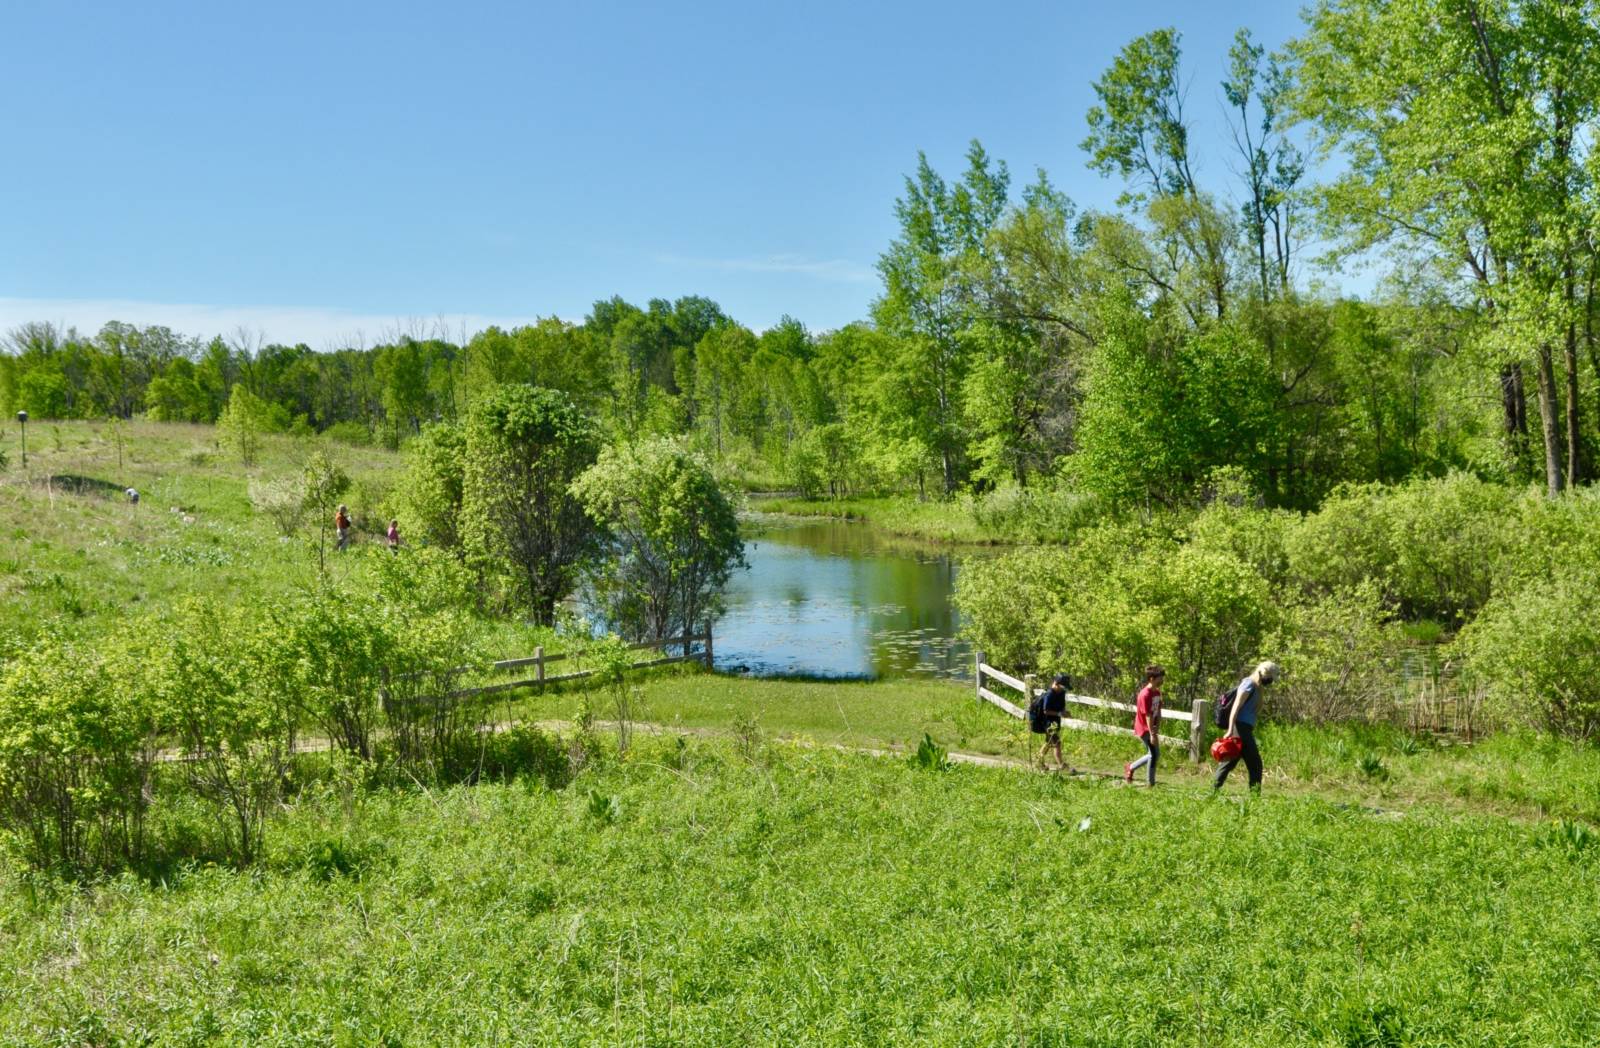 landscape view of Farm Pond at Riveredge in spring